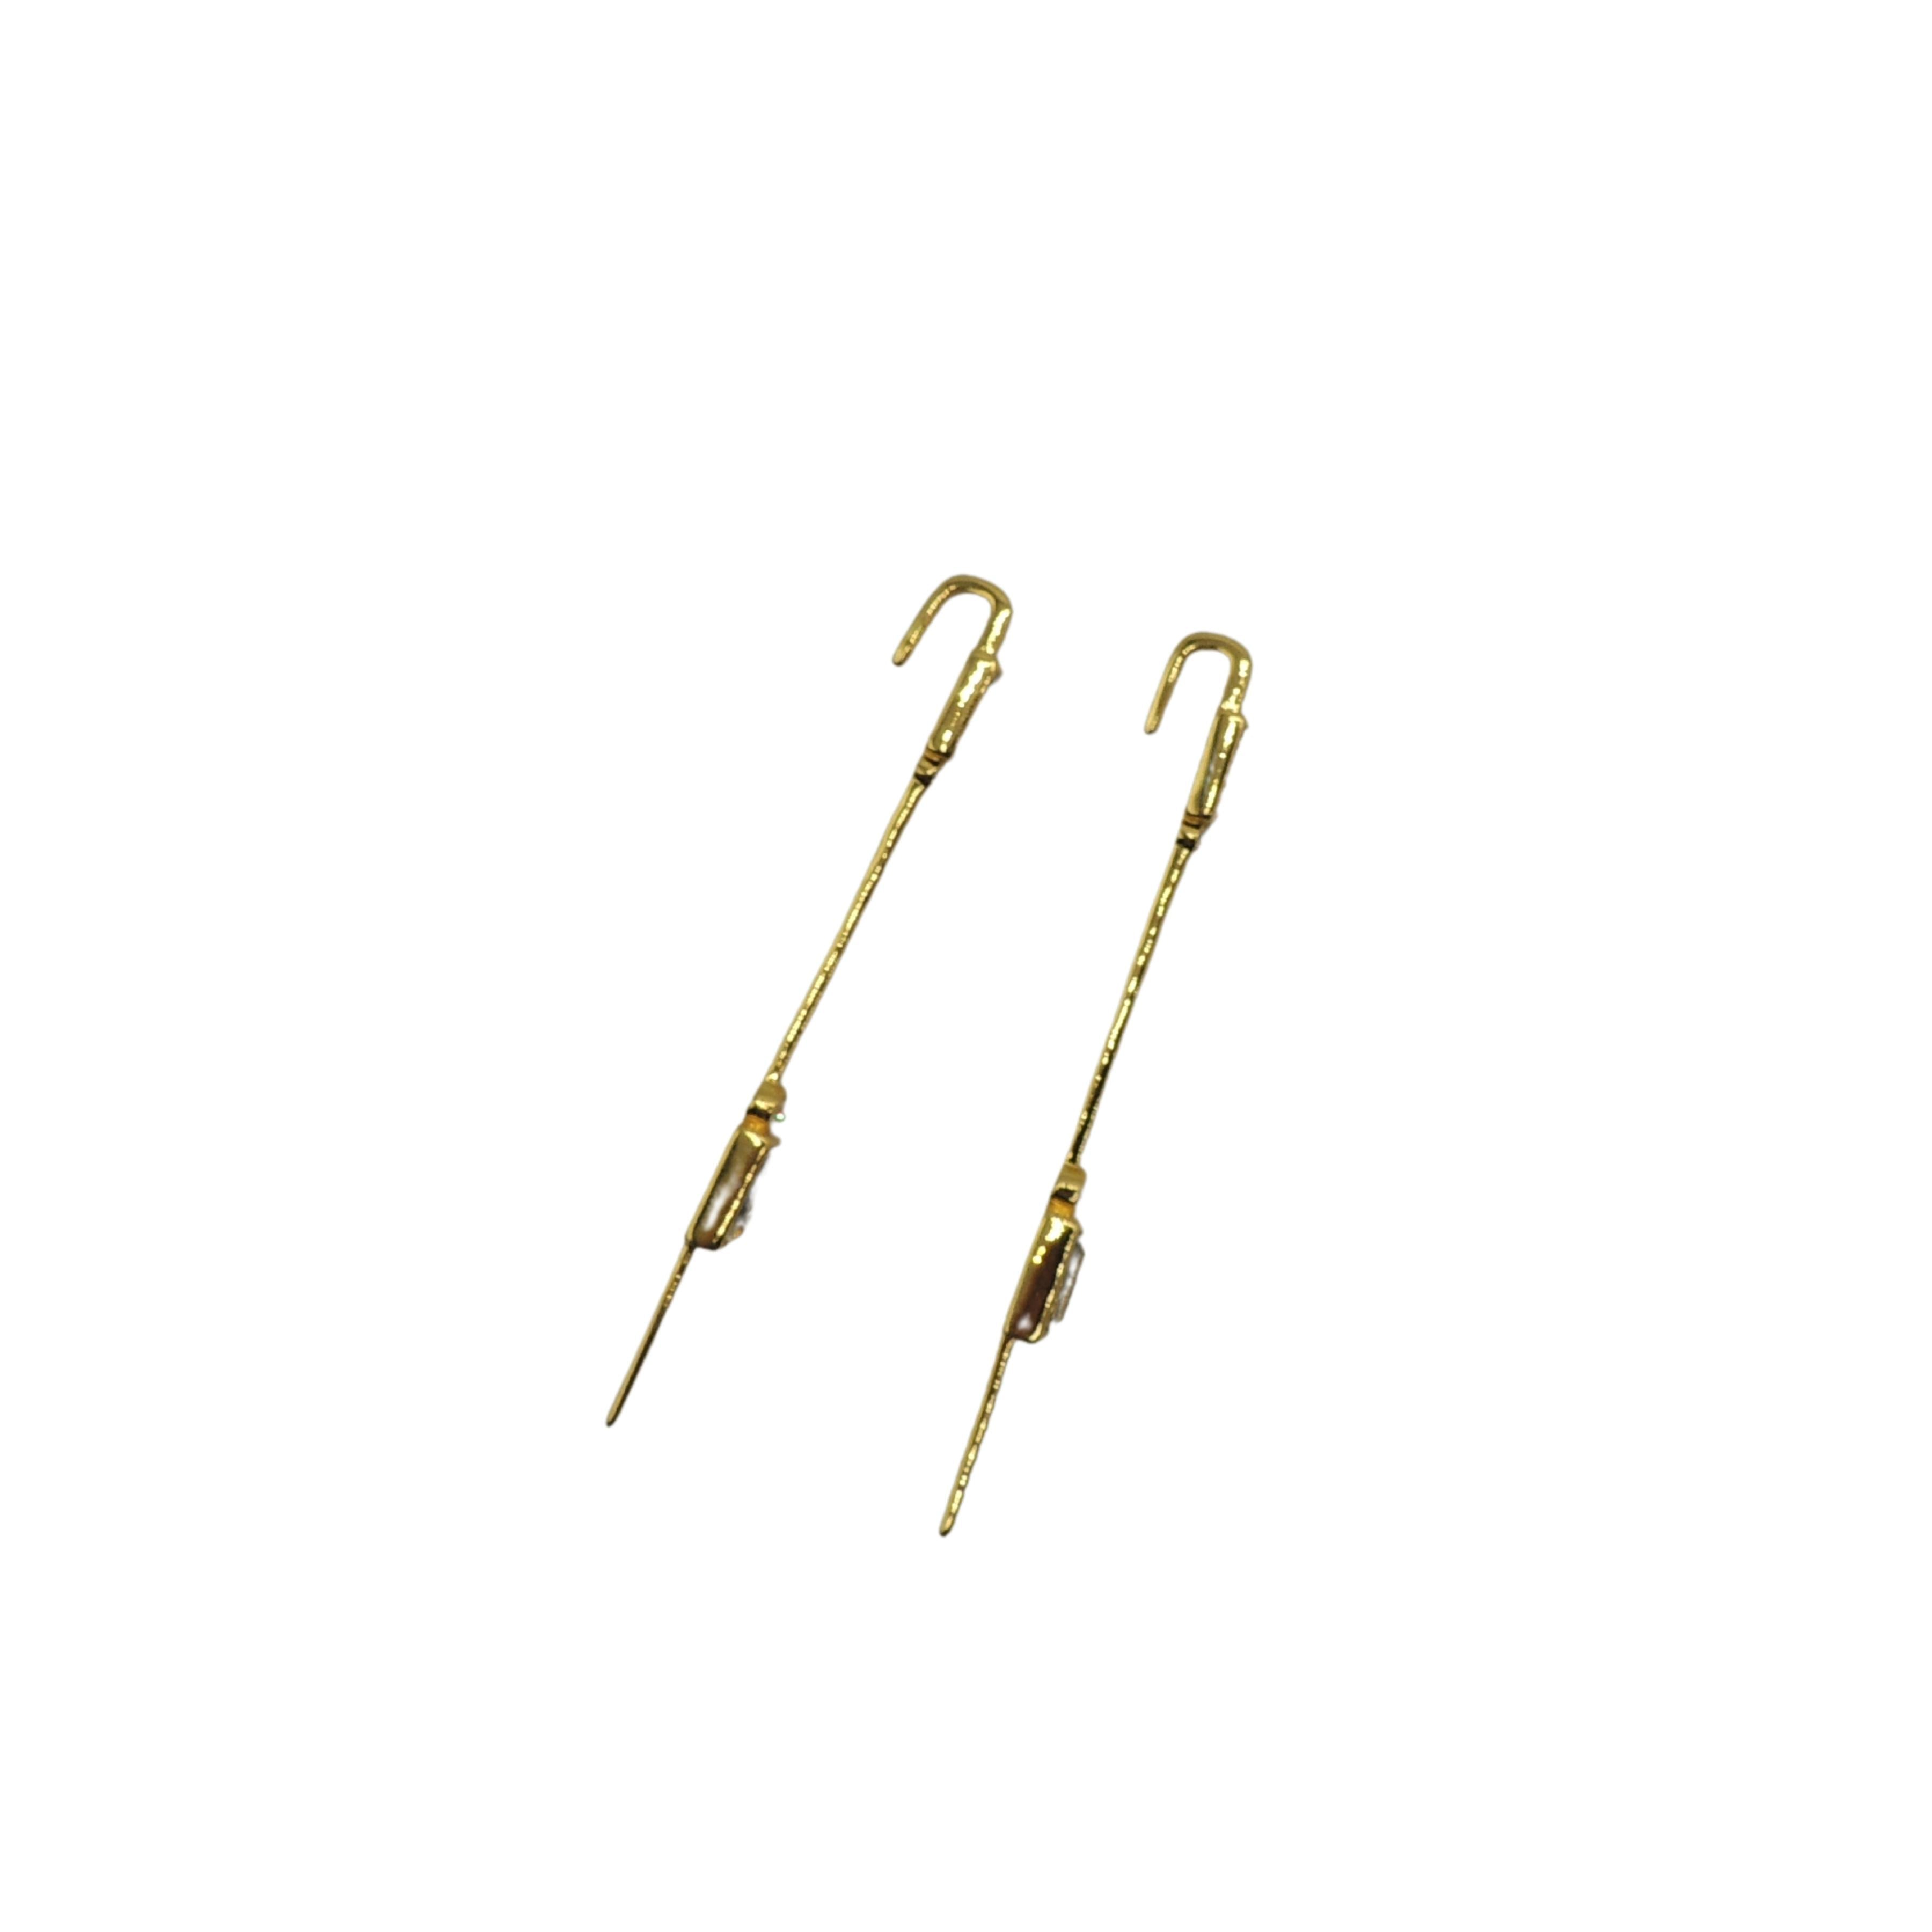 Bonheur Jewellery Gold Plated Virginie Pin Ear Cuff Earrings